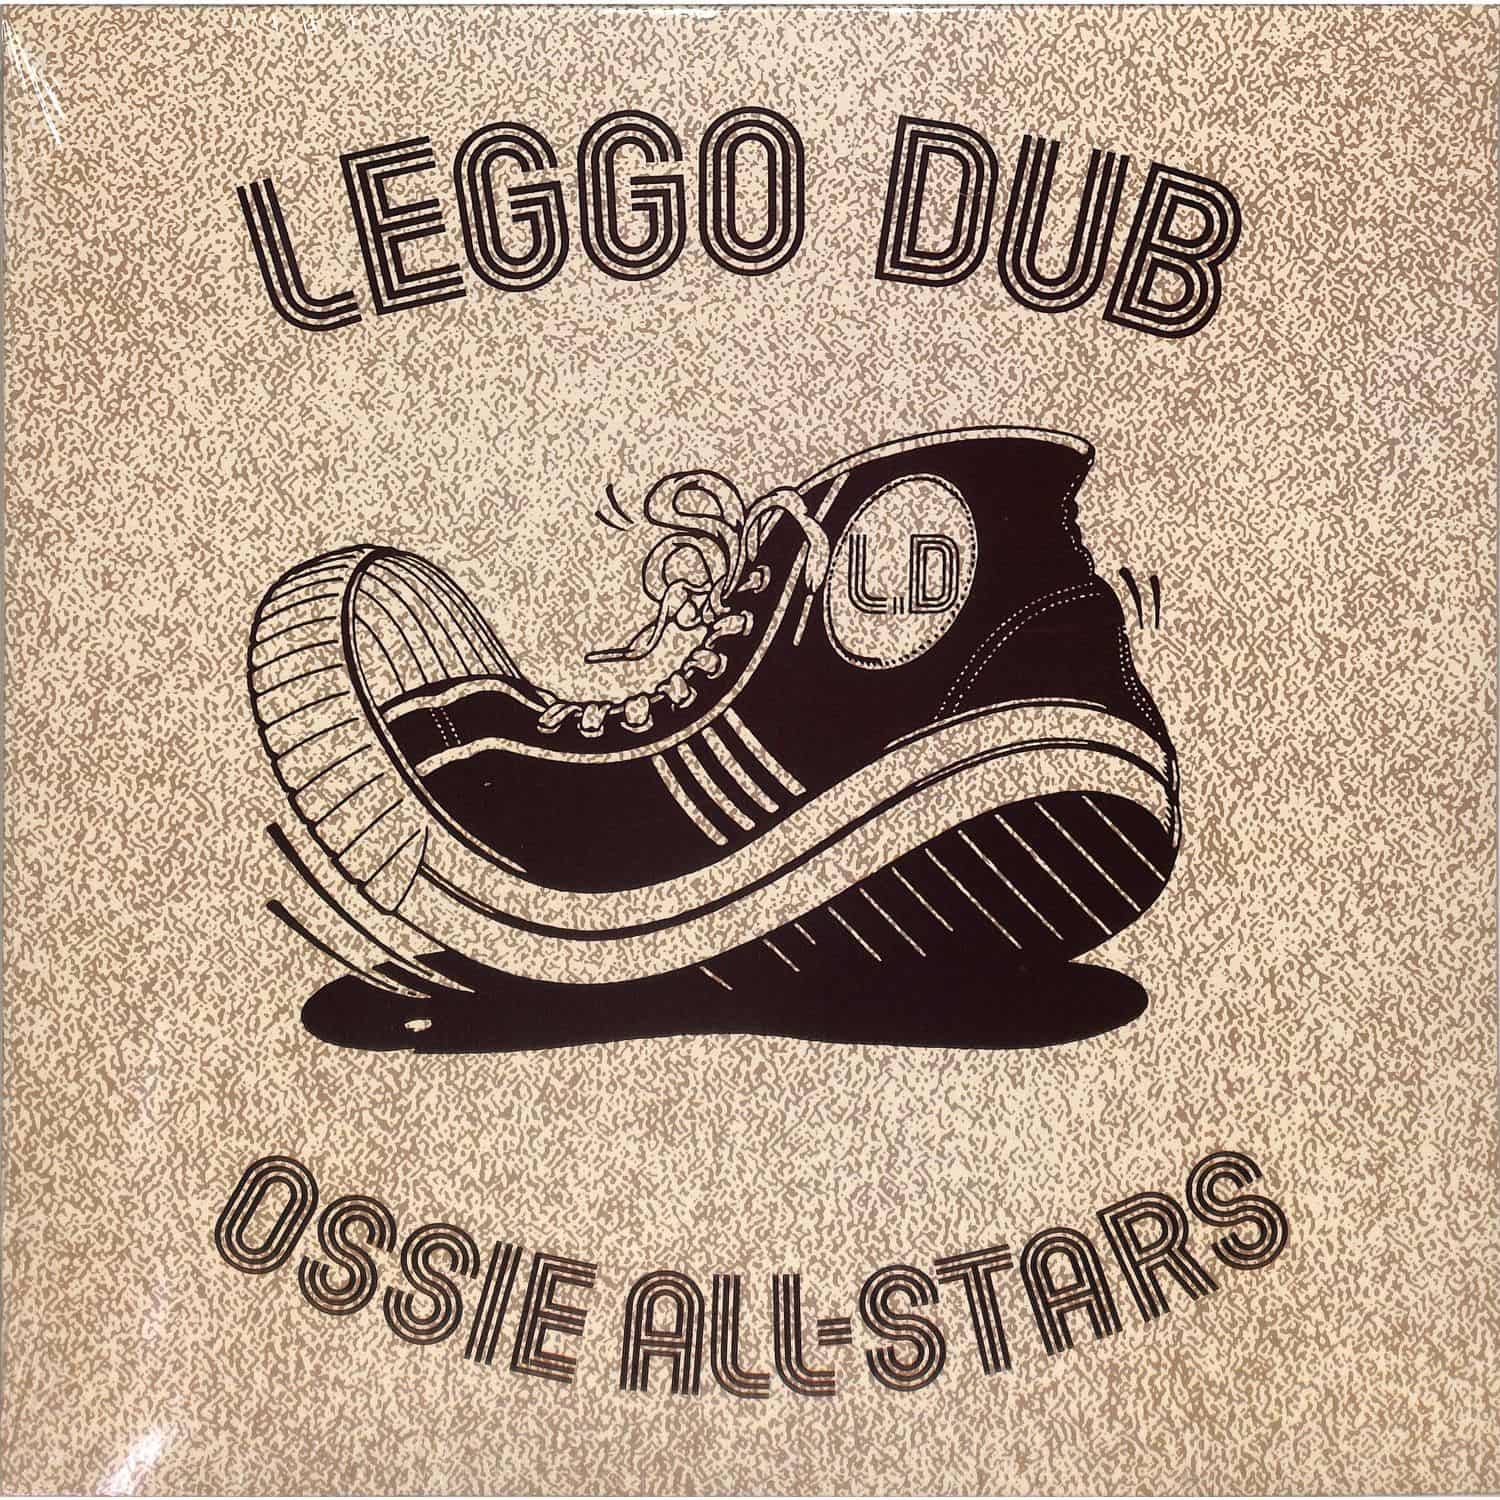 Ossie All-Stars - LEGGO DUB 